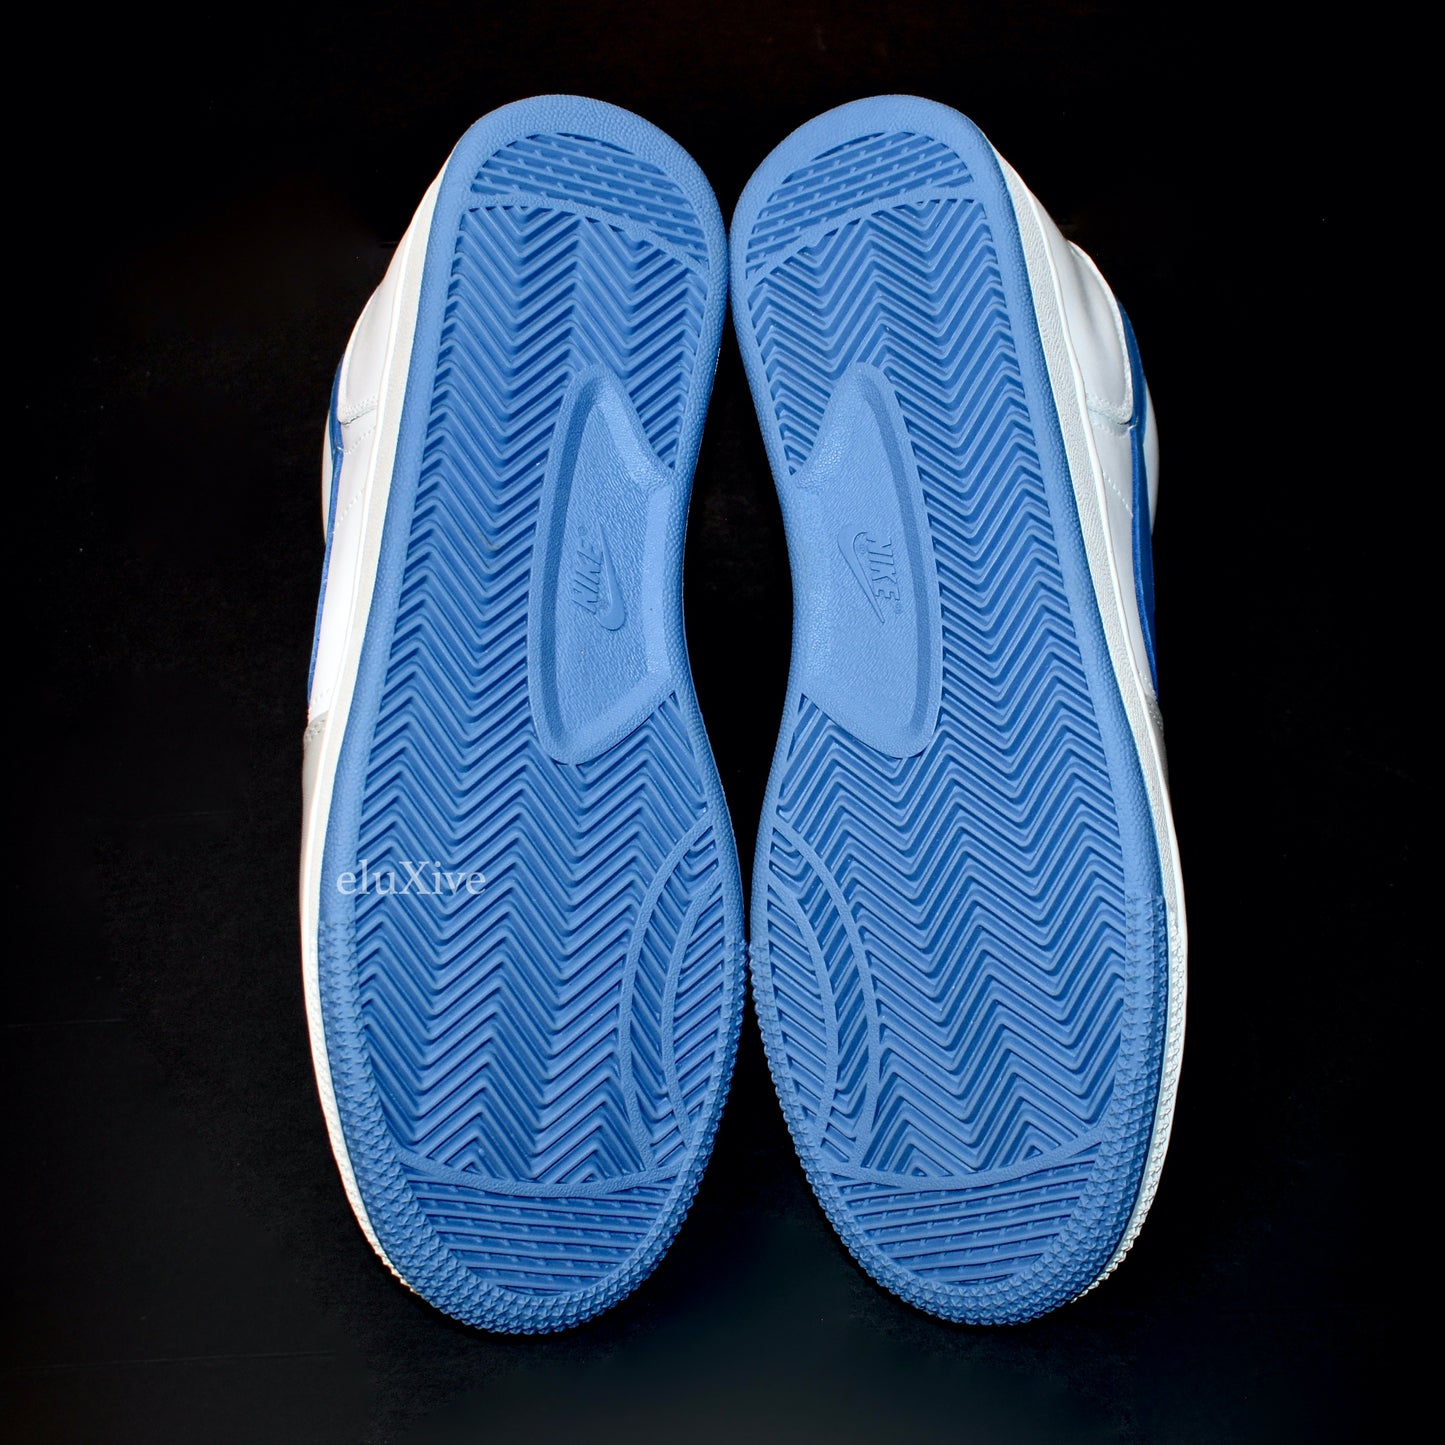 Nike - Terminator Low (White/Gray/Varsity Blue)